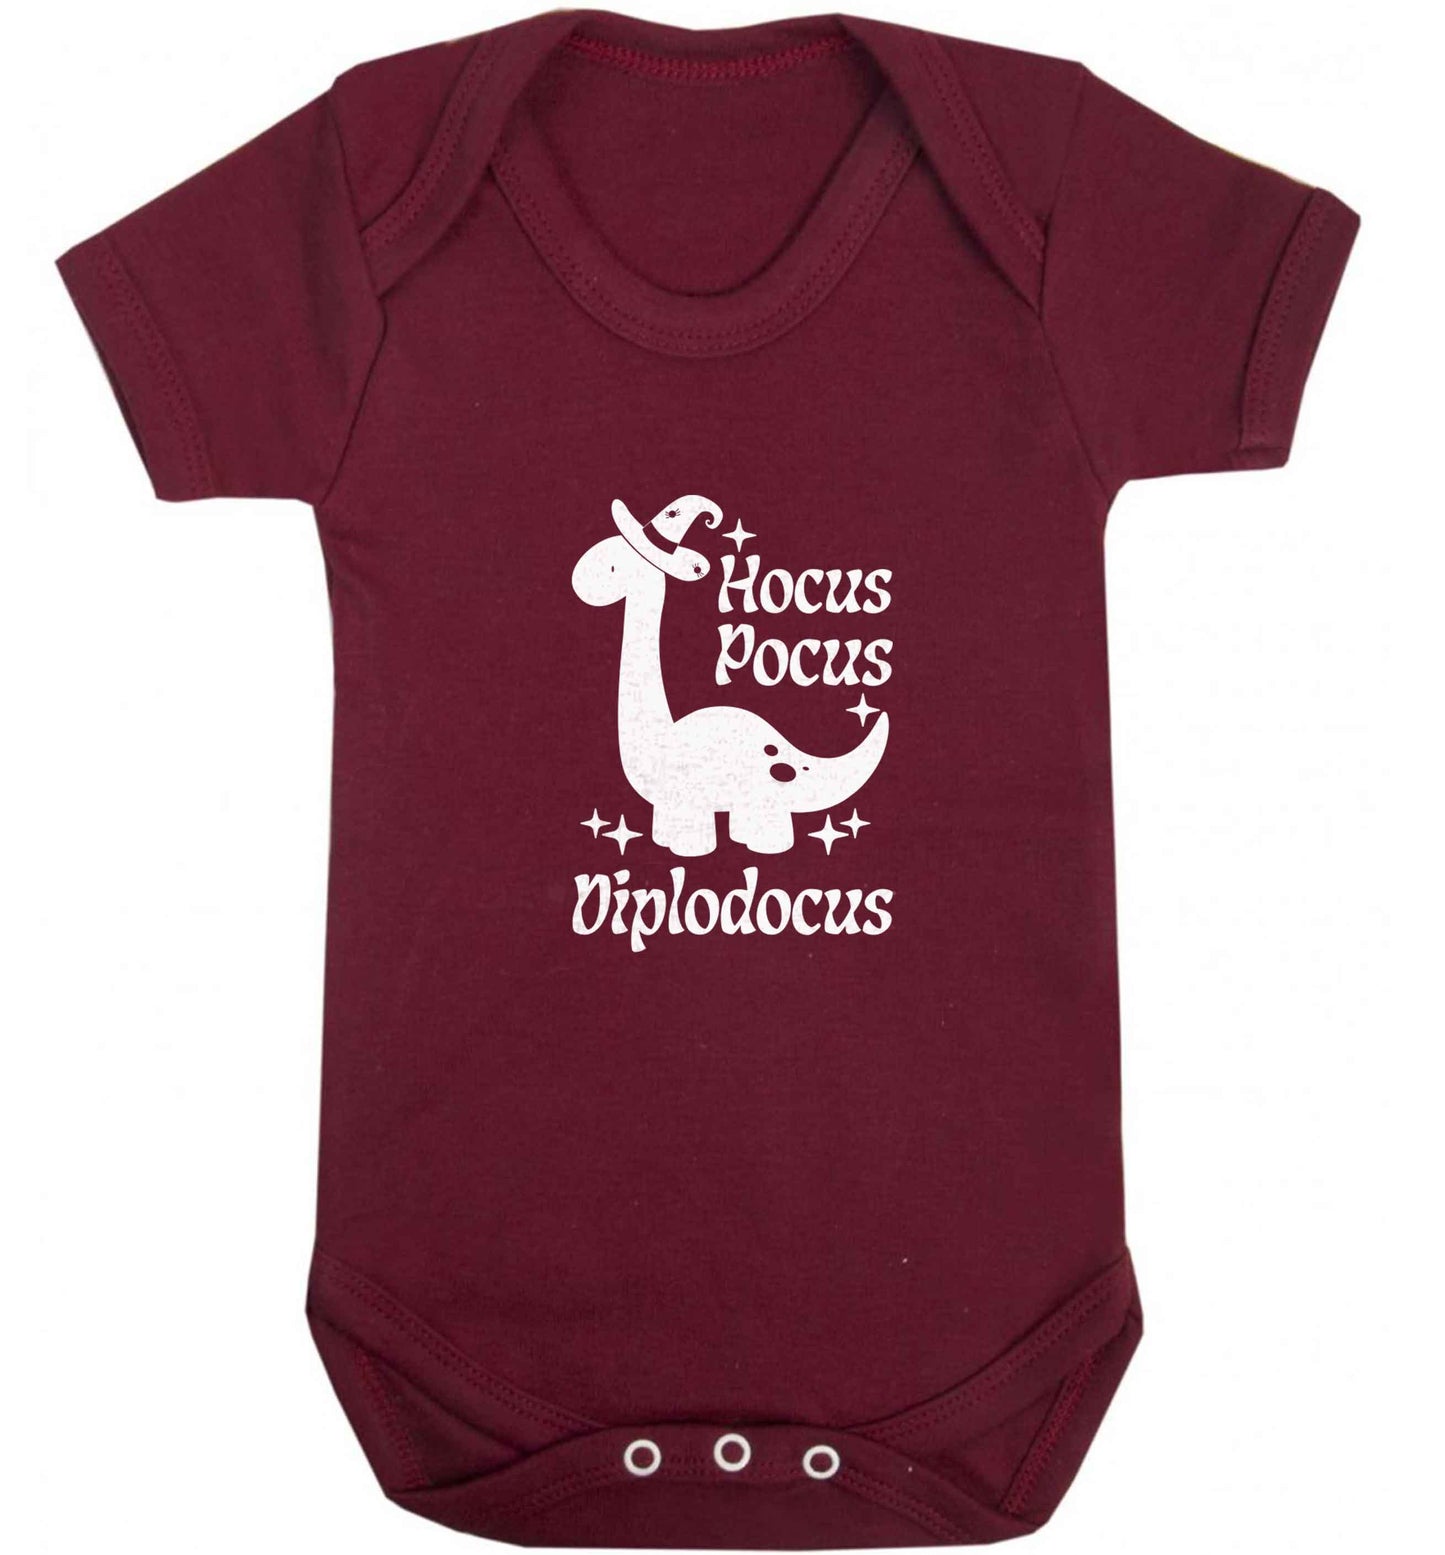 Hocus pocus diplodocus Kit baby vest maroon 18-24 months